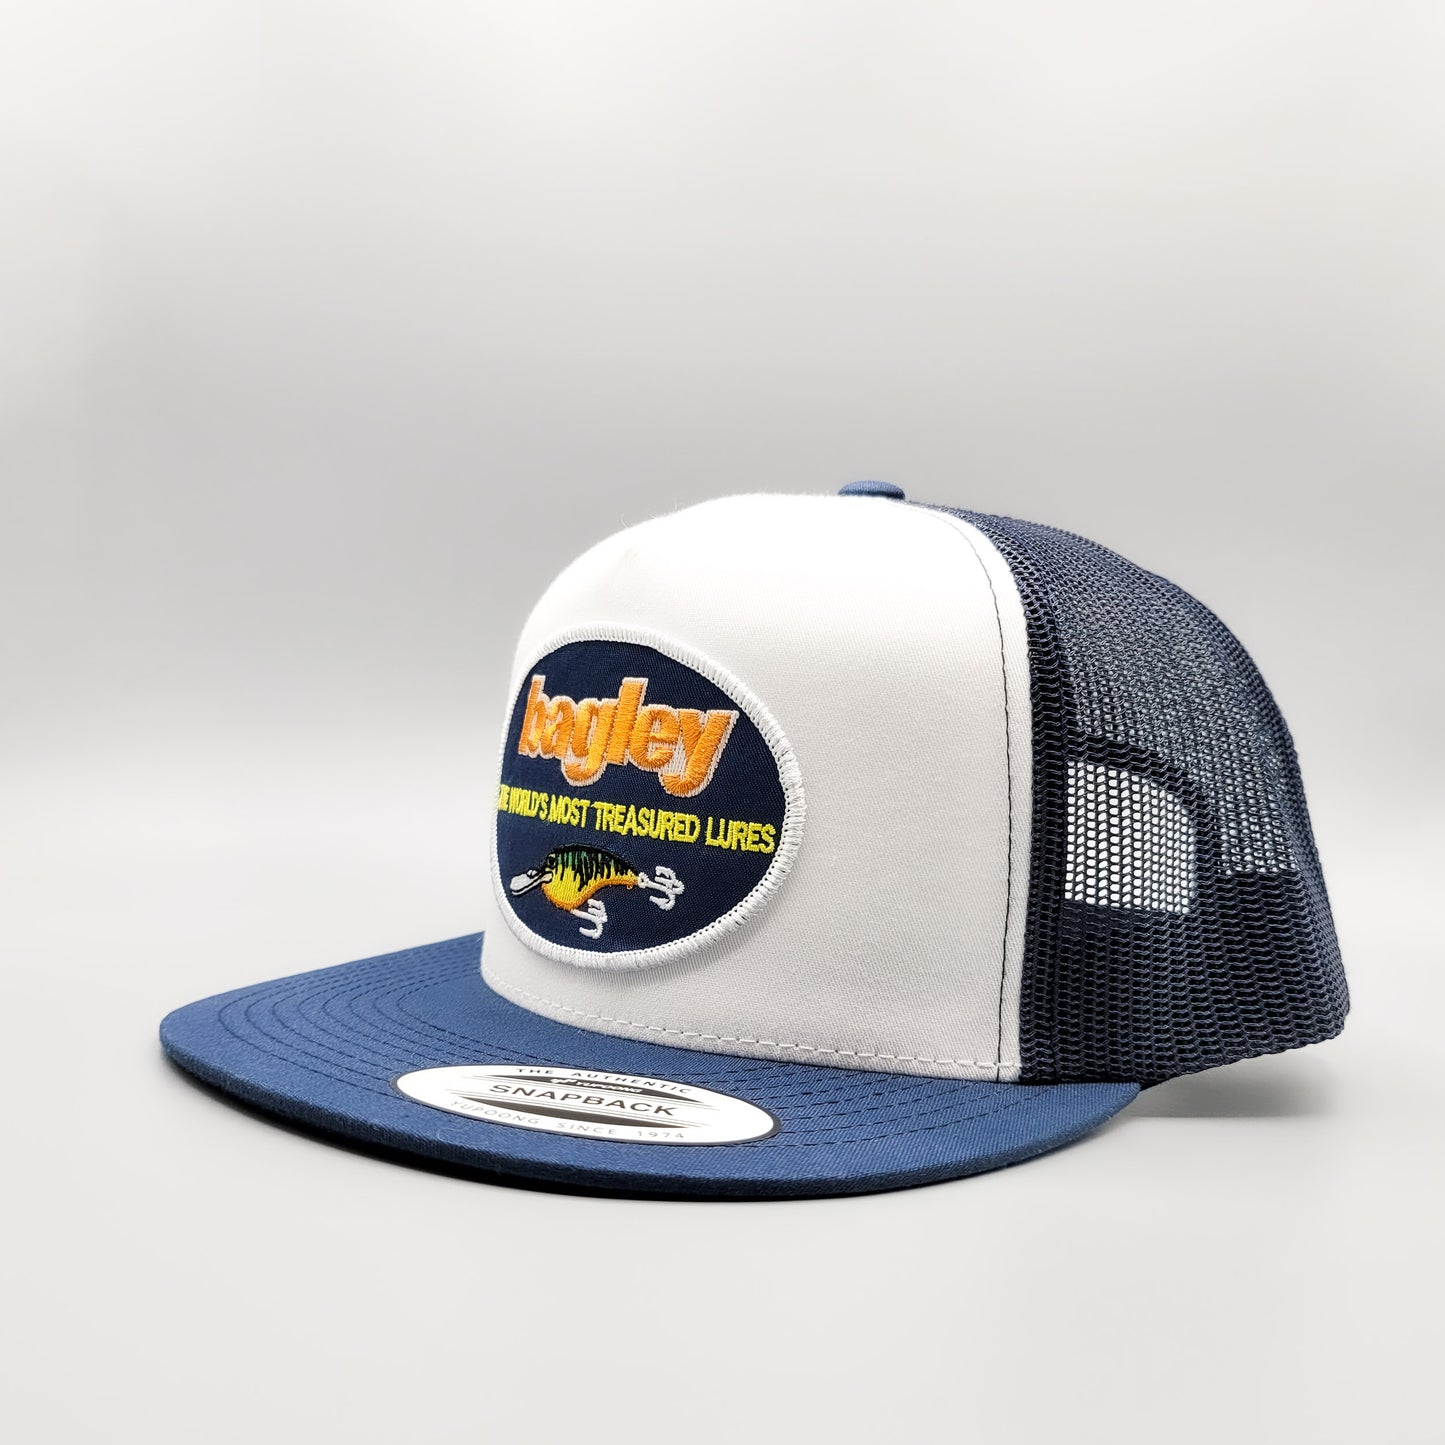 Bagley Fishing Lures Trucker Hat